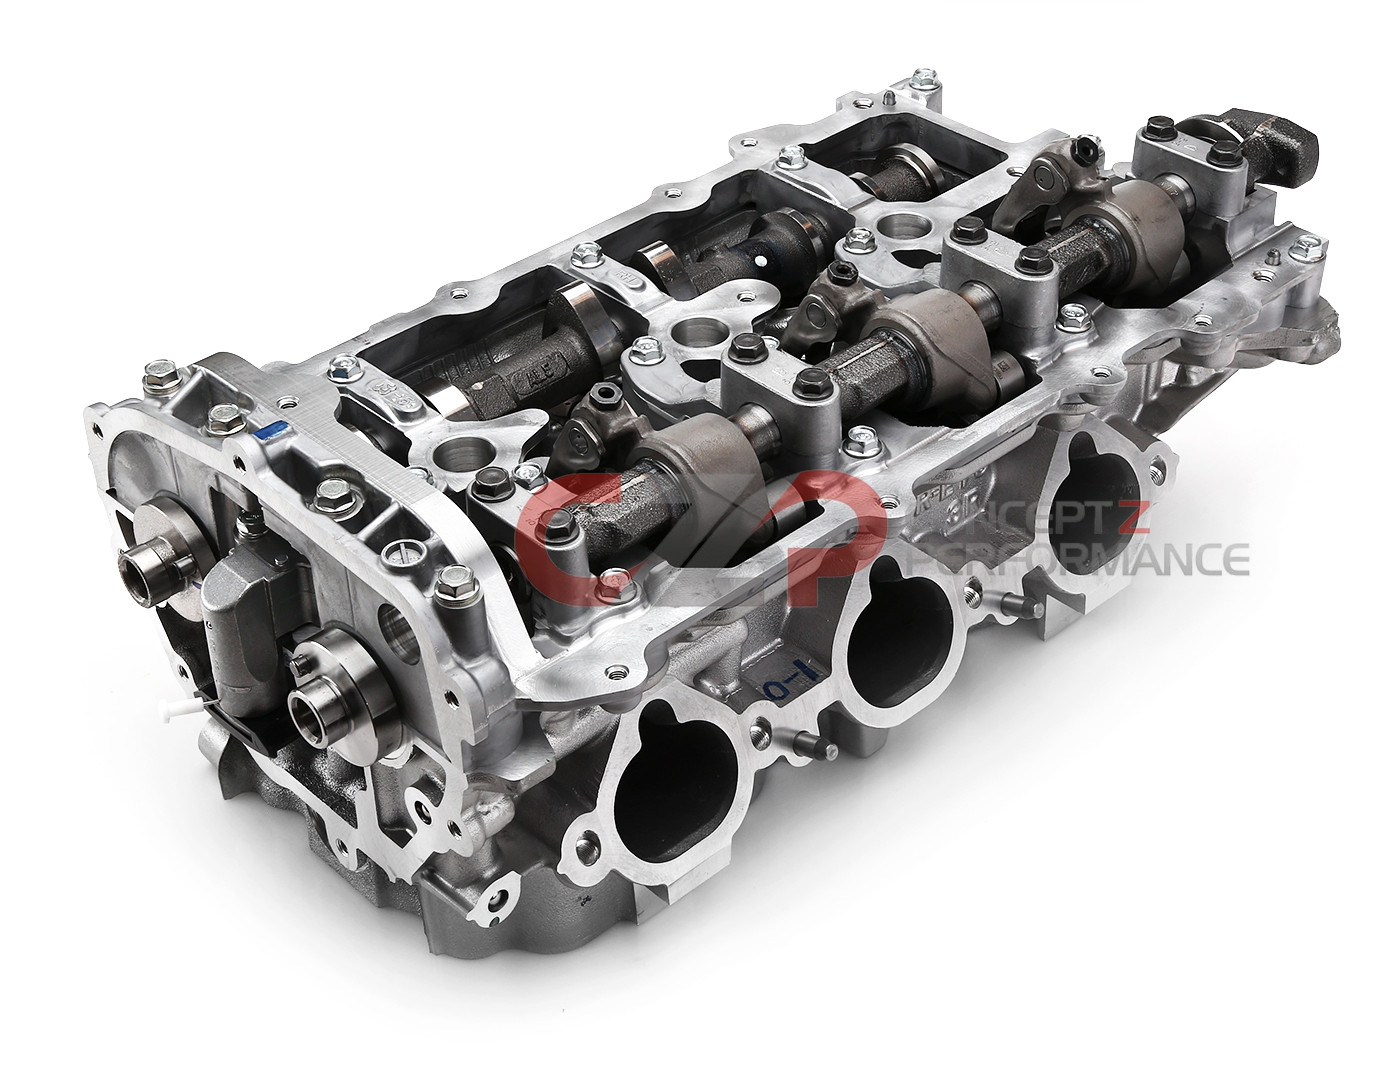 Nissan OEM Complete Cylinder Head Assembly VQ37VHR, RH - Nissan 370Z 09+ Z34